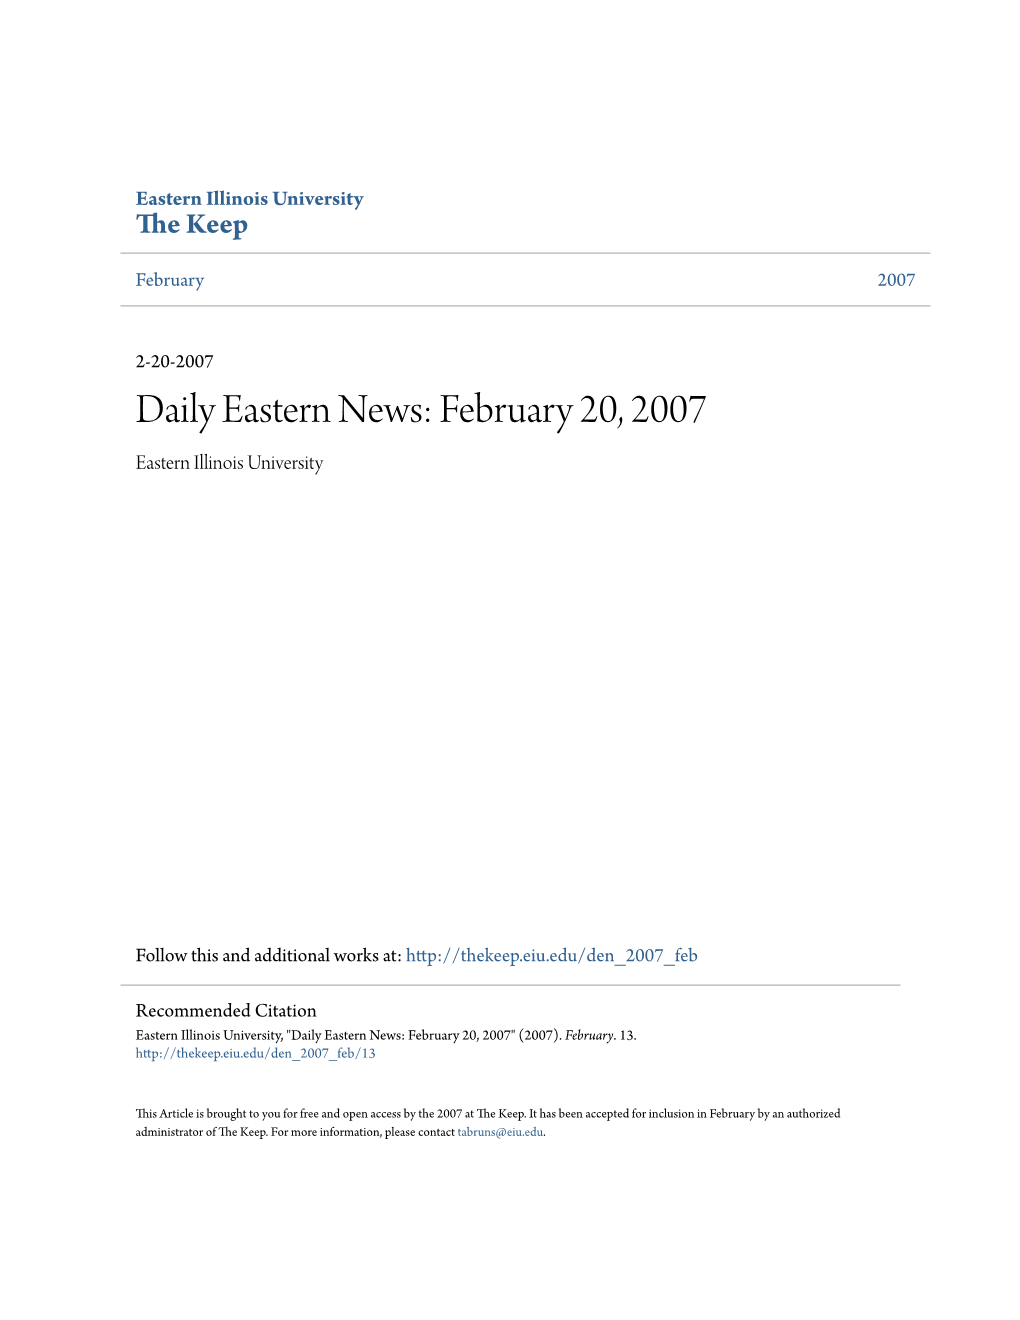 Daily Eastern News: February 20, 2007 Eastern Illinois University